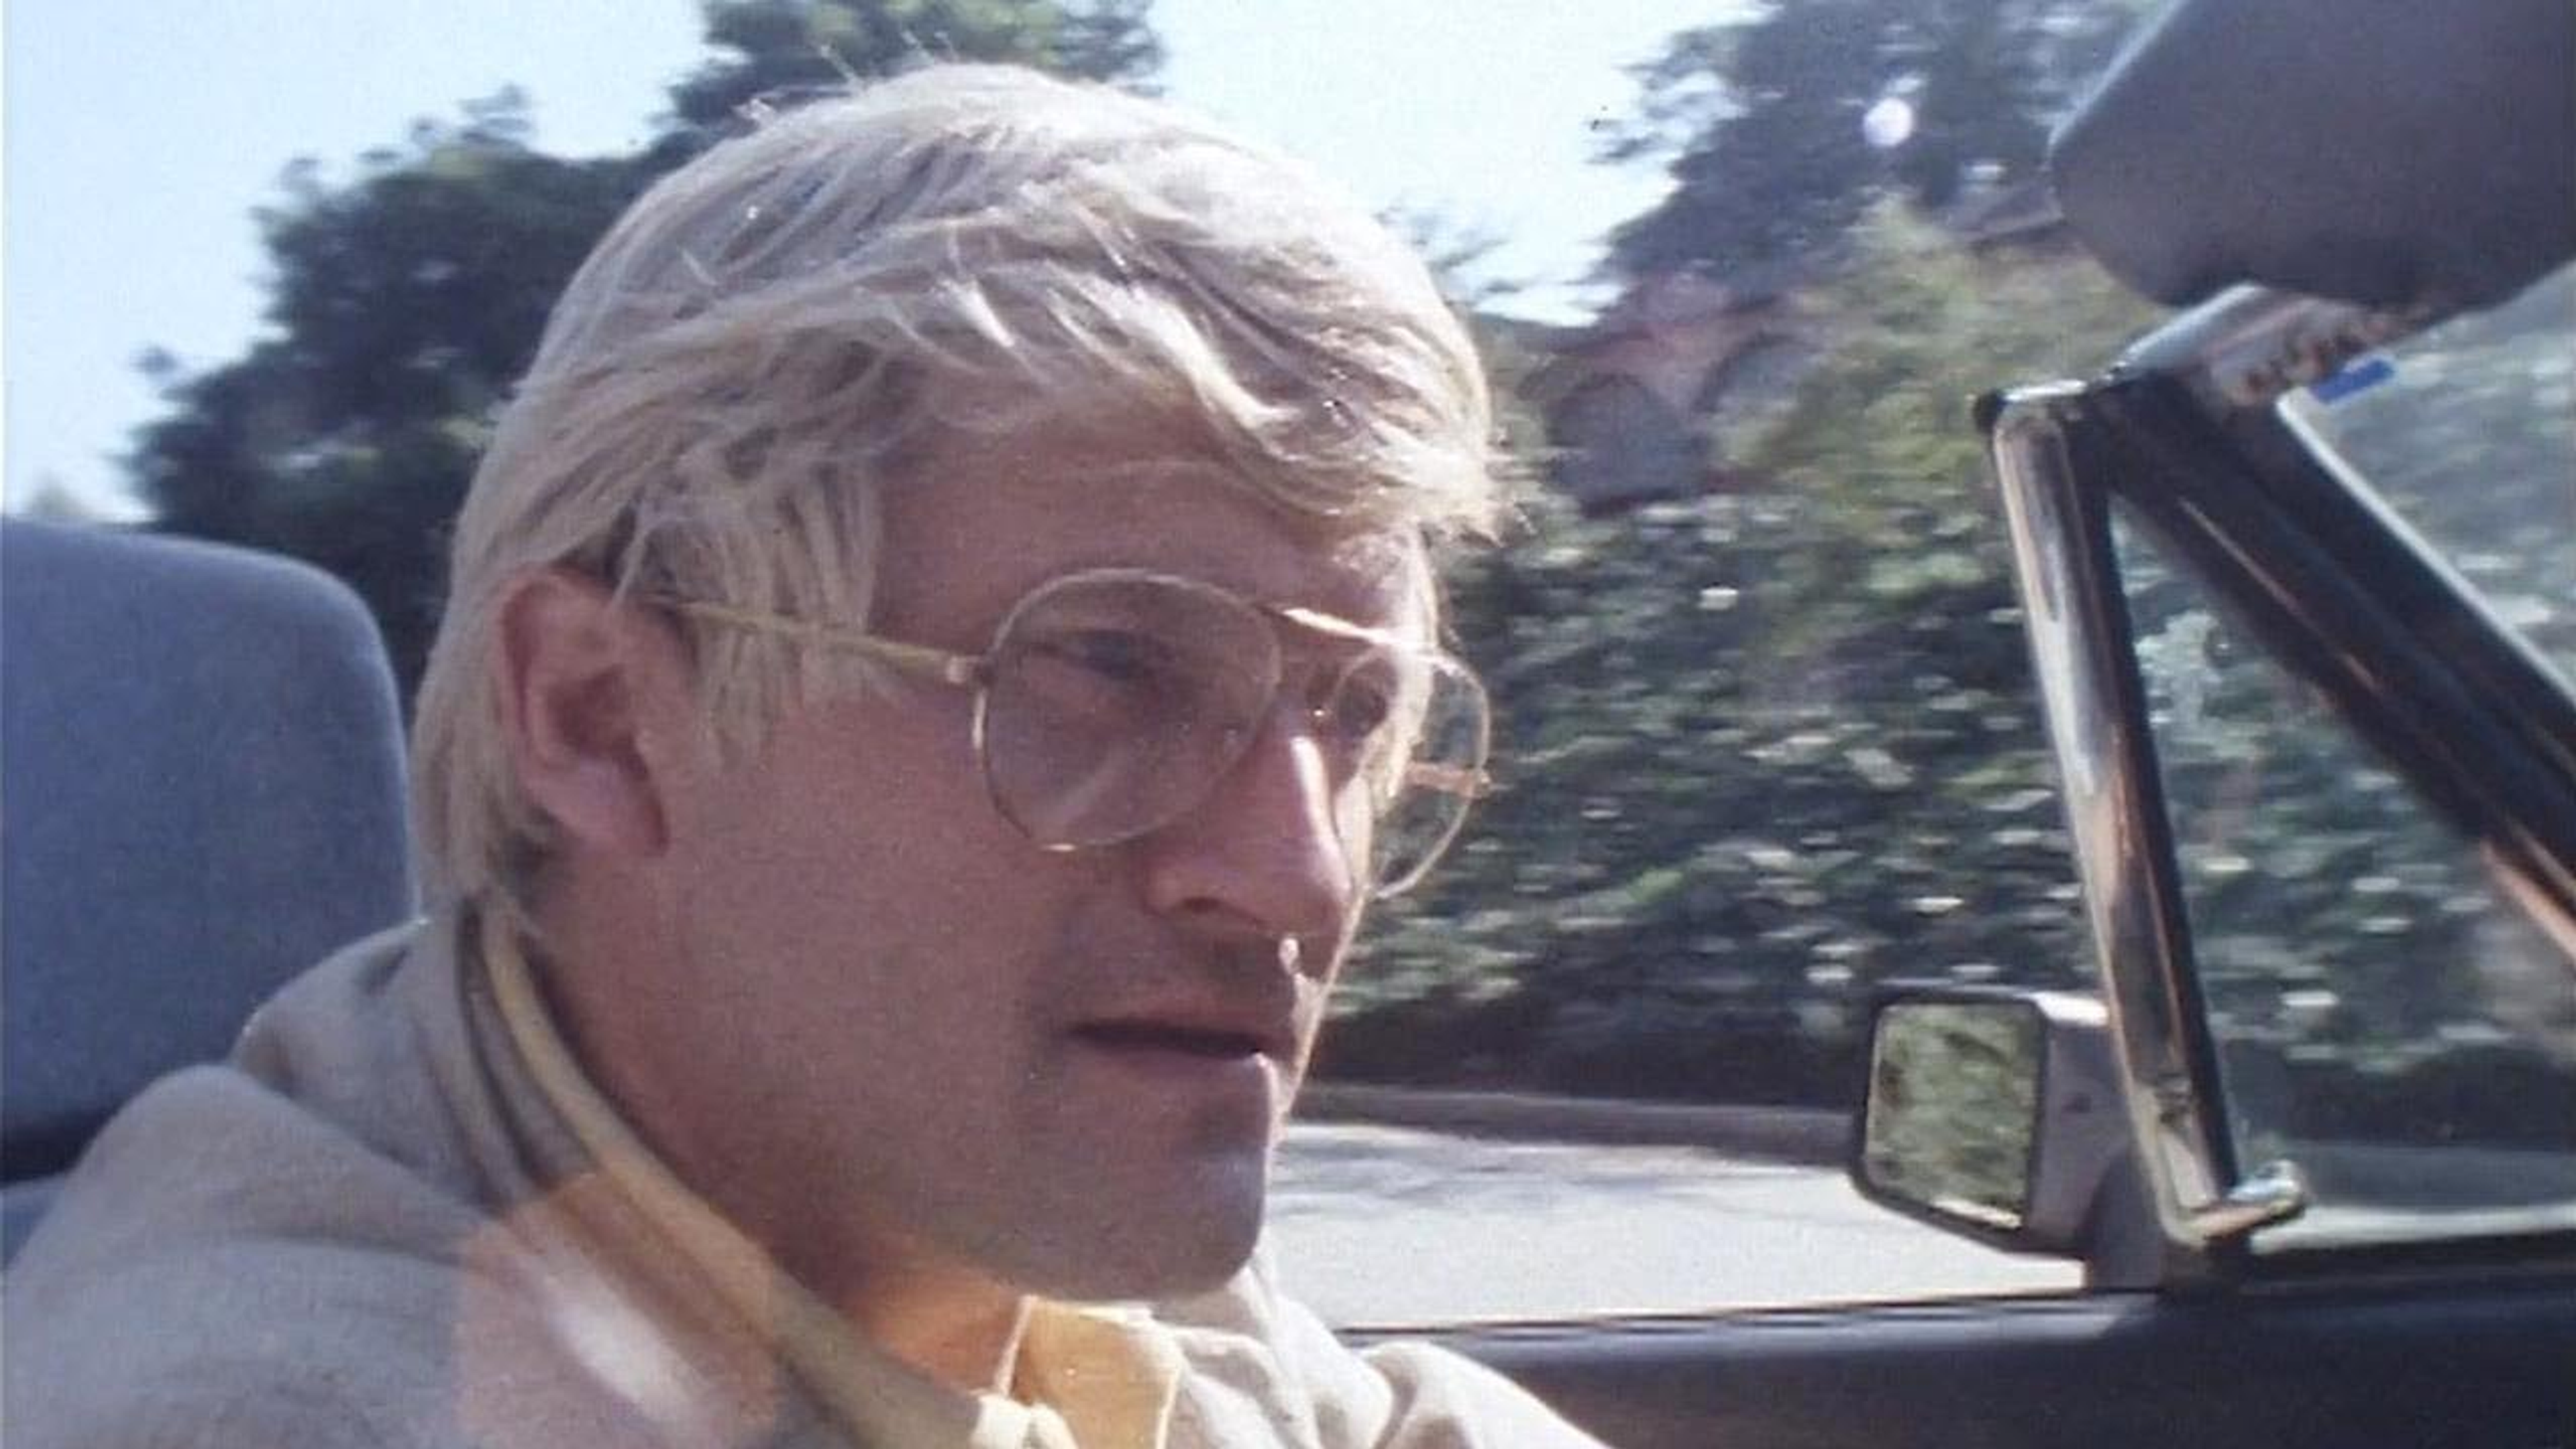 This screenshot shows the artist David Hockney, still young, driving a convertible car.